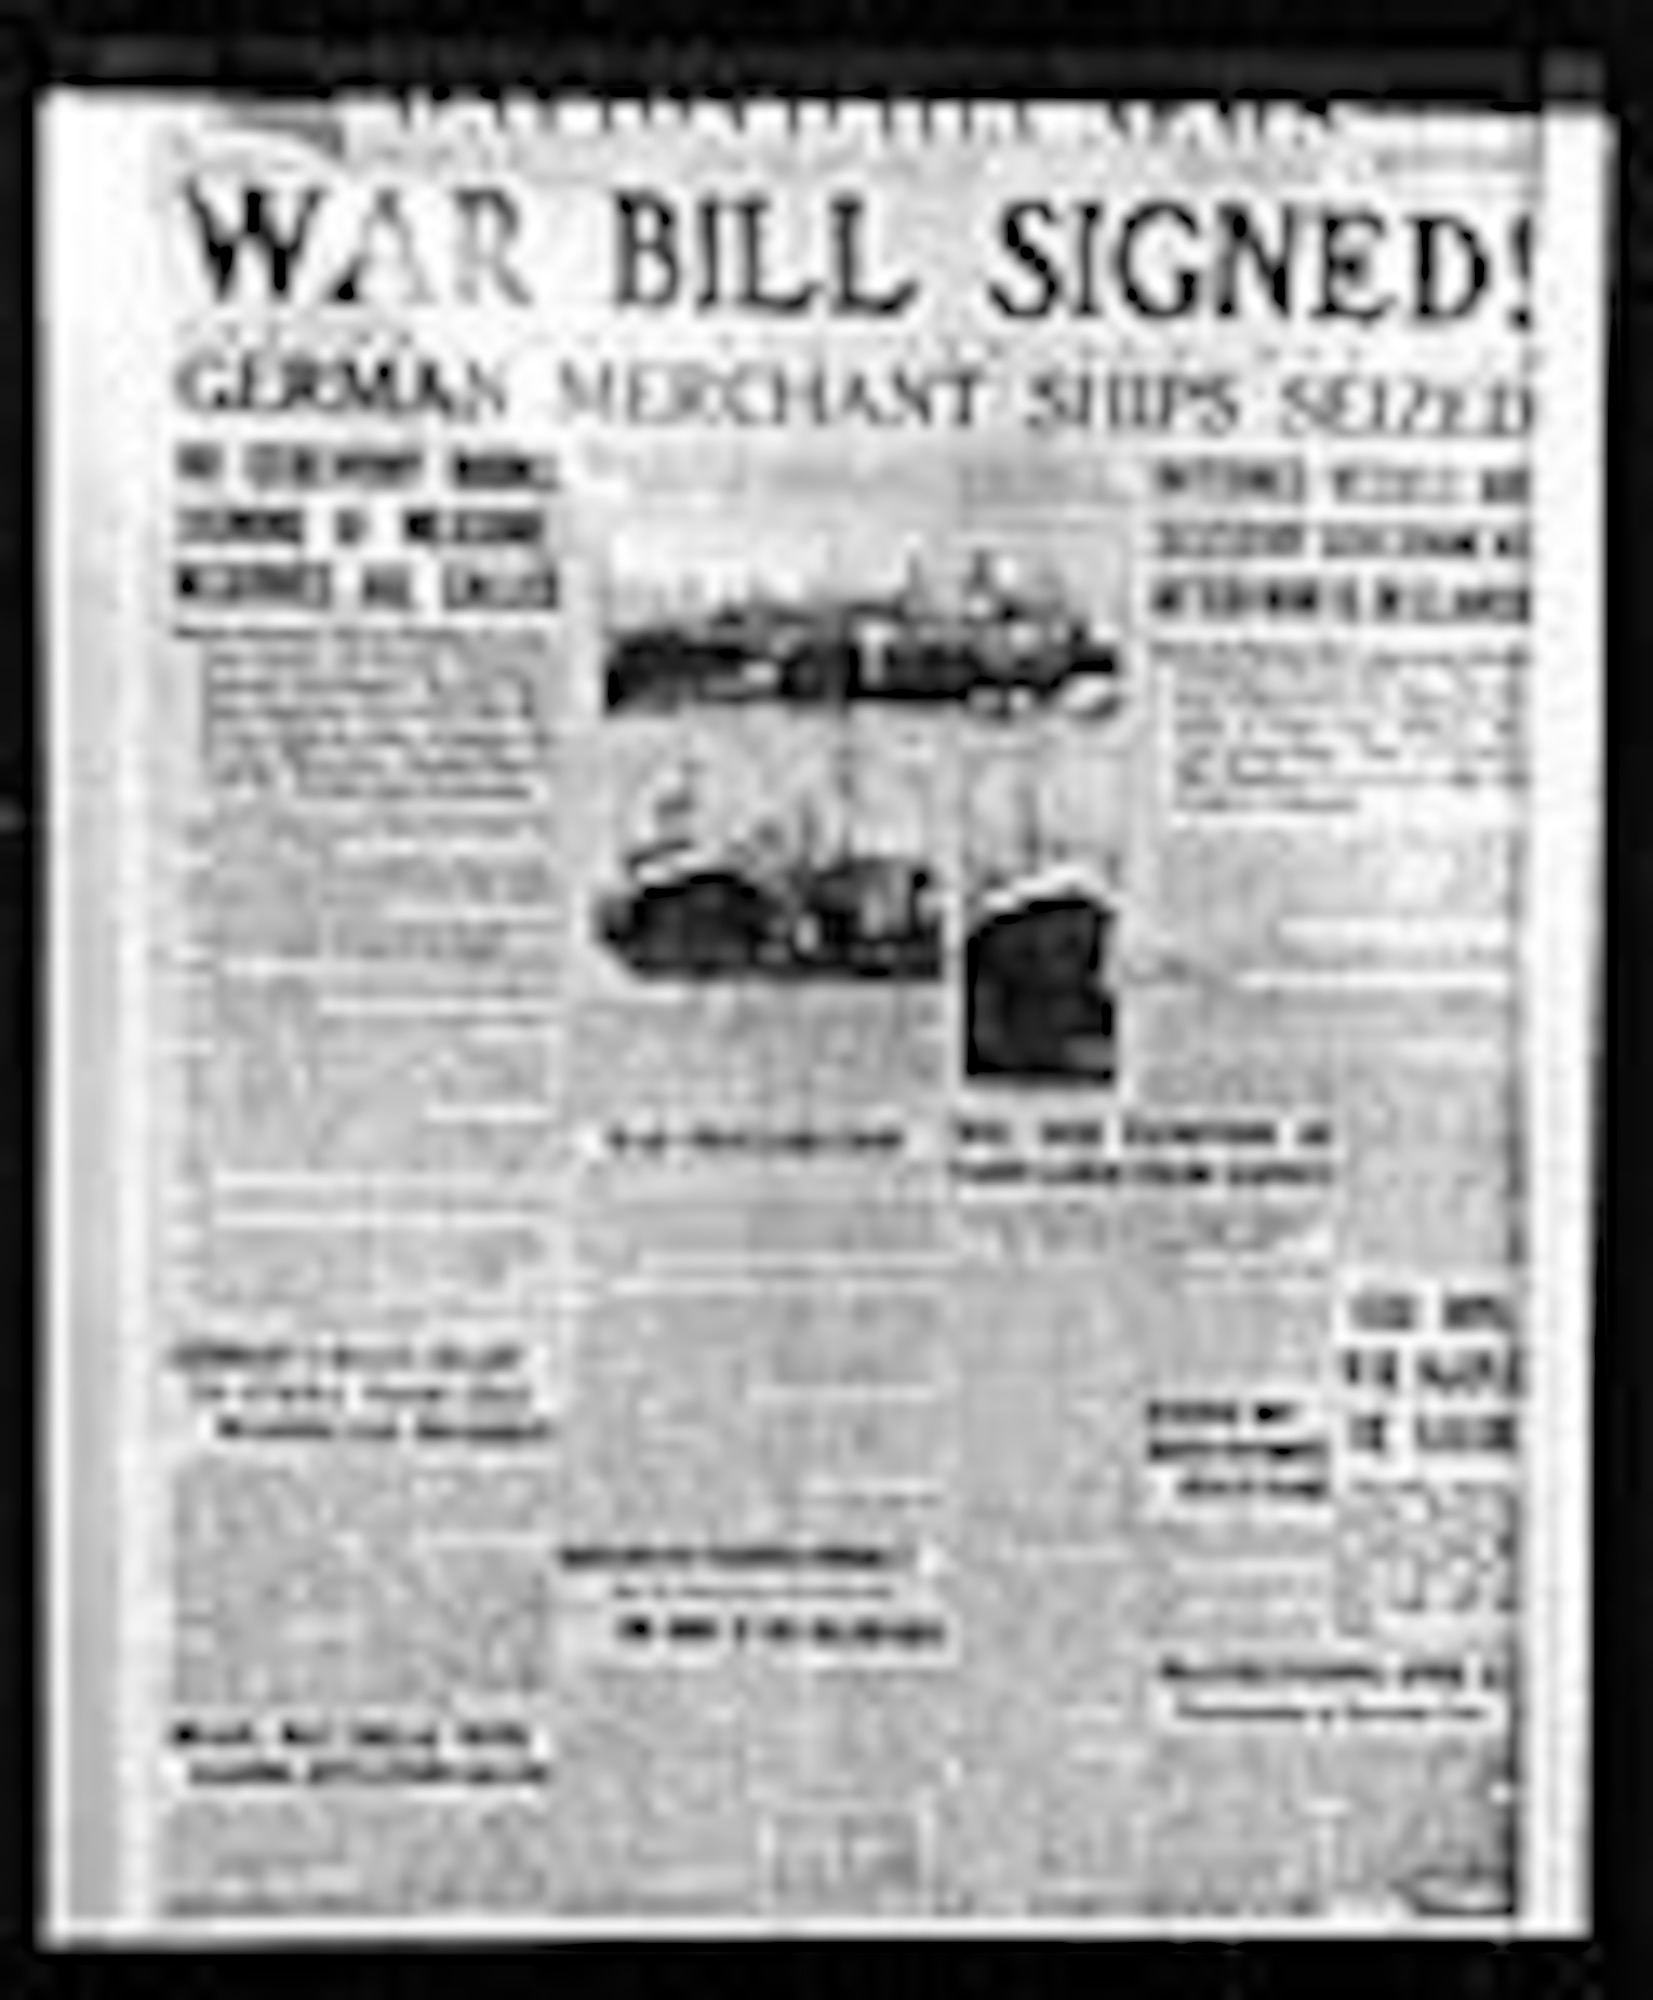 This newspaper headline reads "War bill signed: German merchant ships seized." (U.S. Air Force photo)